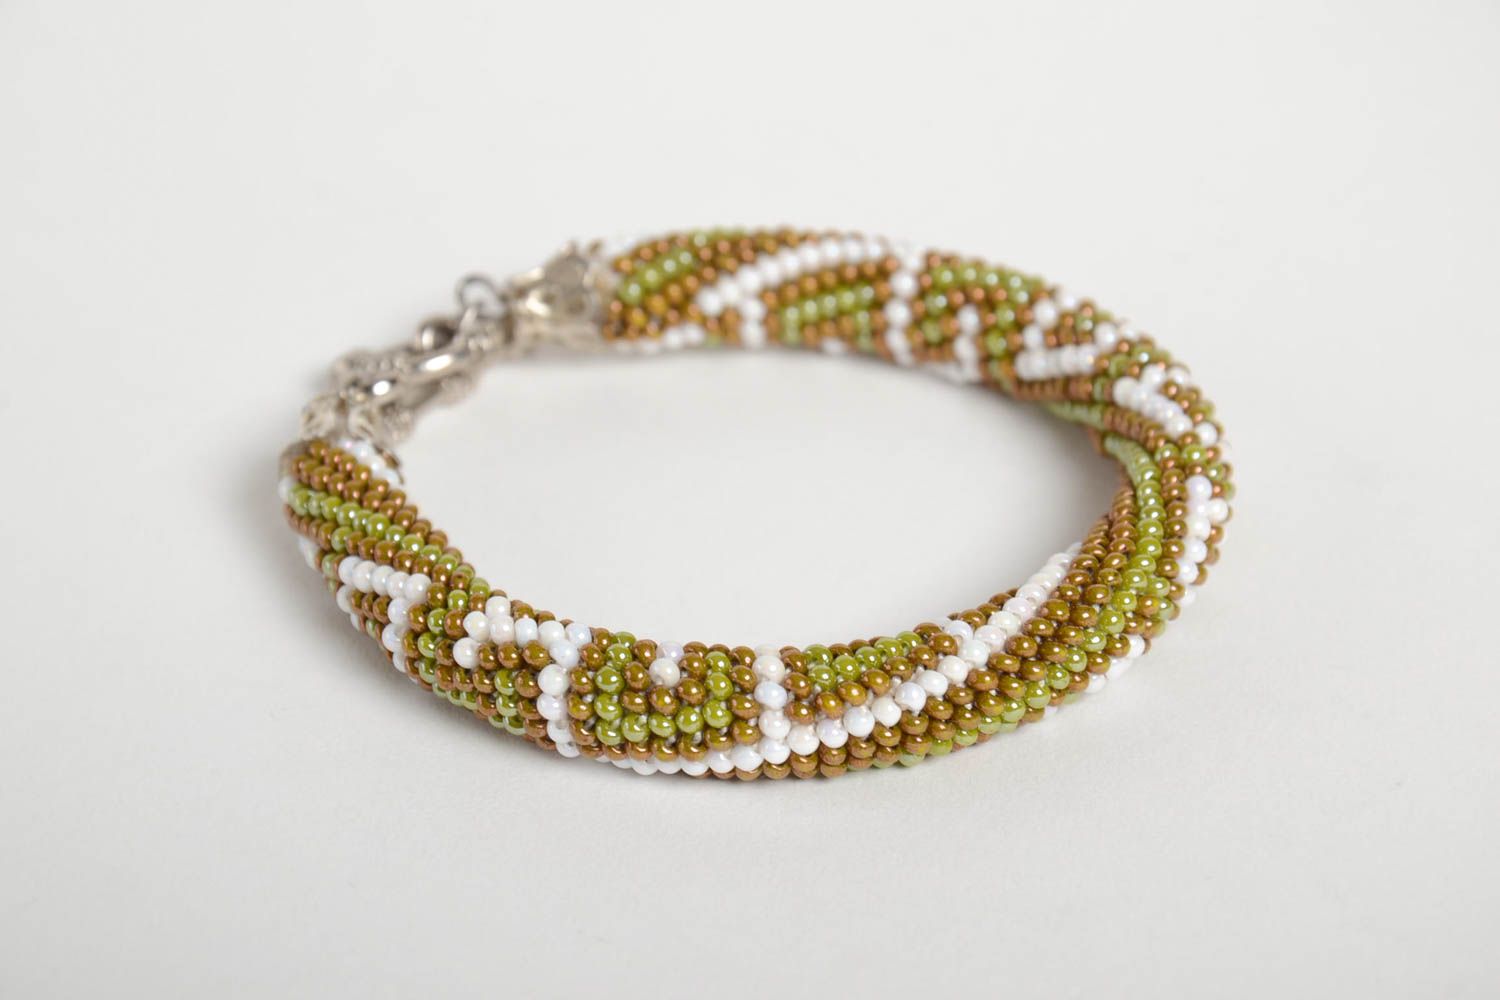 Womens handmade beaded bracelet costume jewelry bead weaving ideas gifts for her photo 5